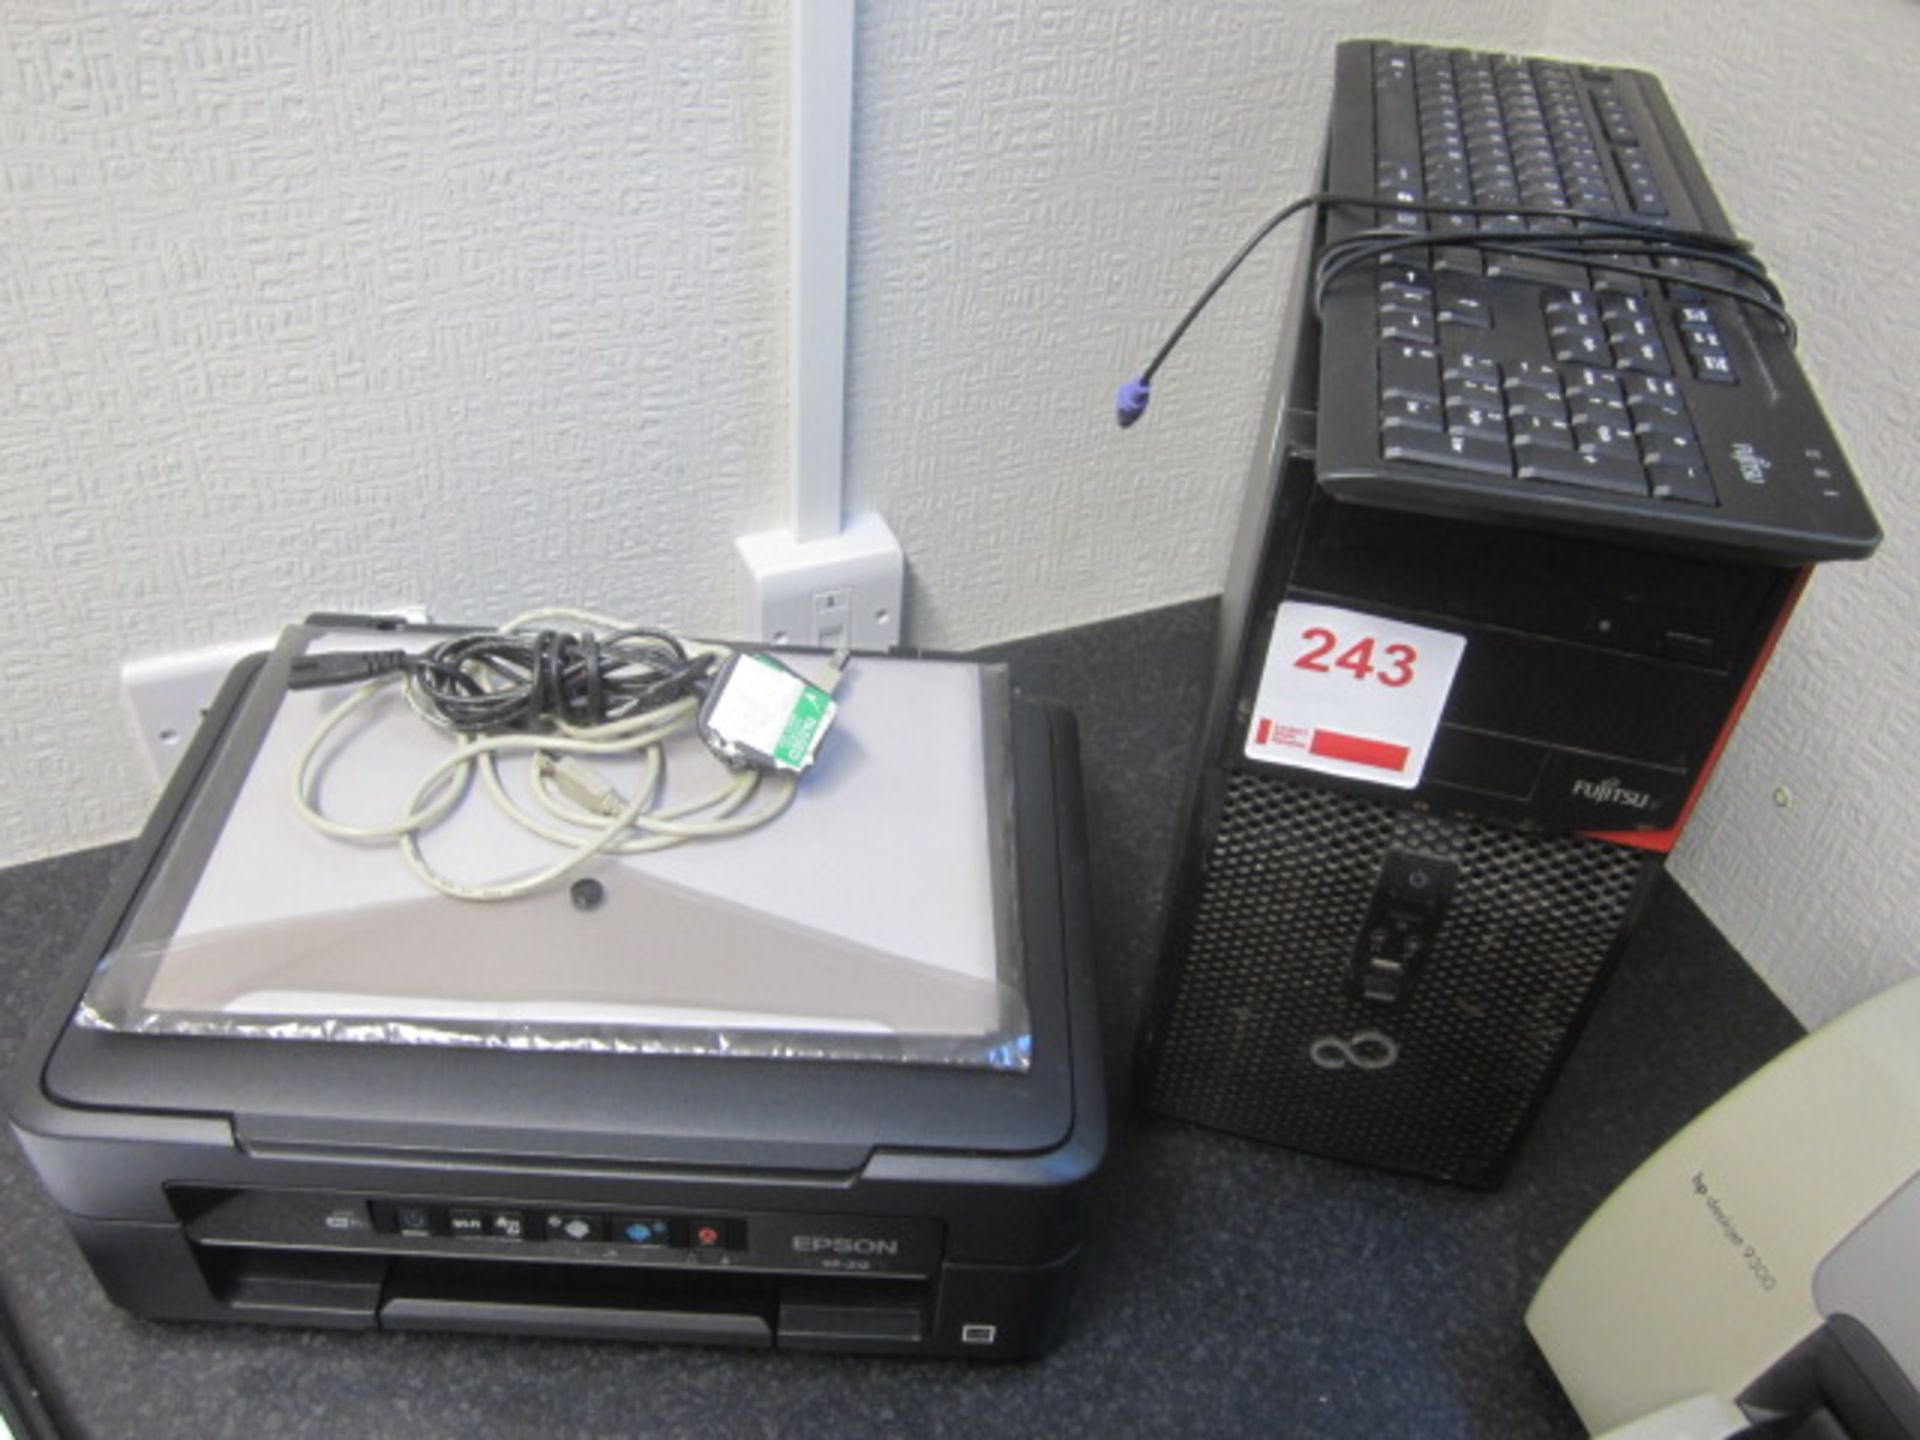 Fujitsu computer tower and Epson XP-212 printer